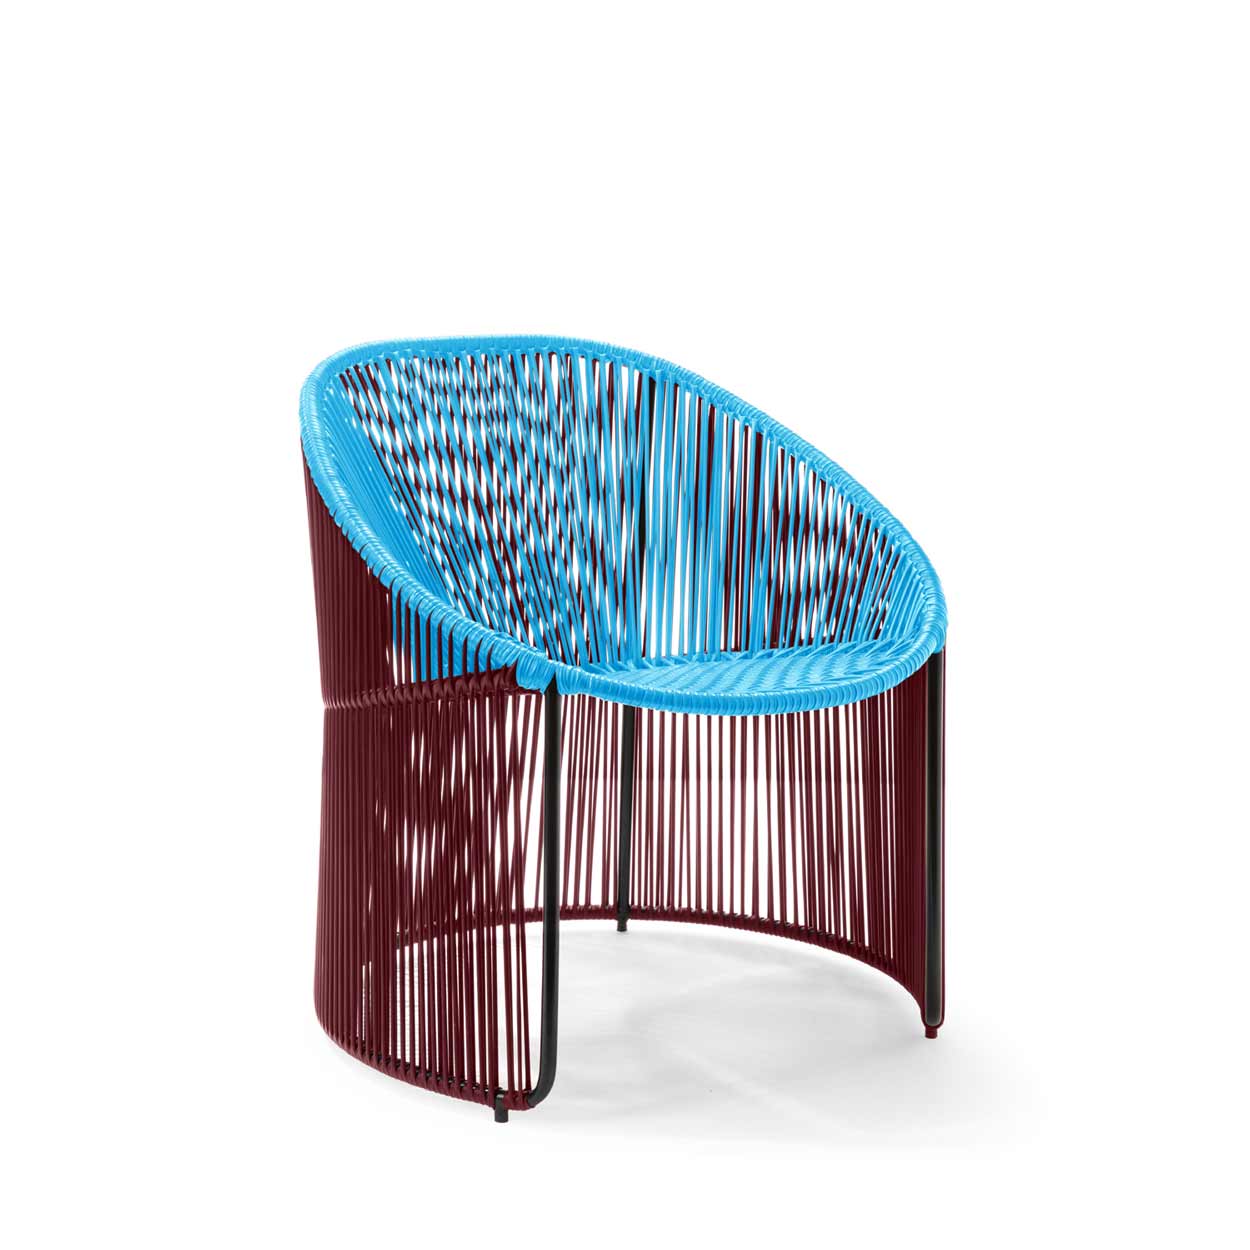 Cartagenas - Lounge Chair